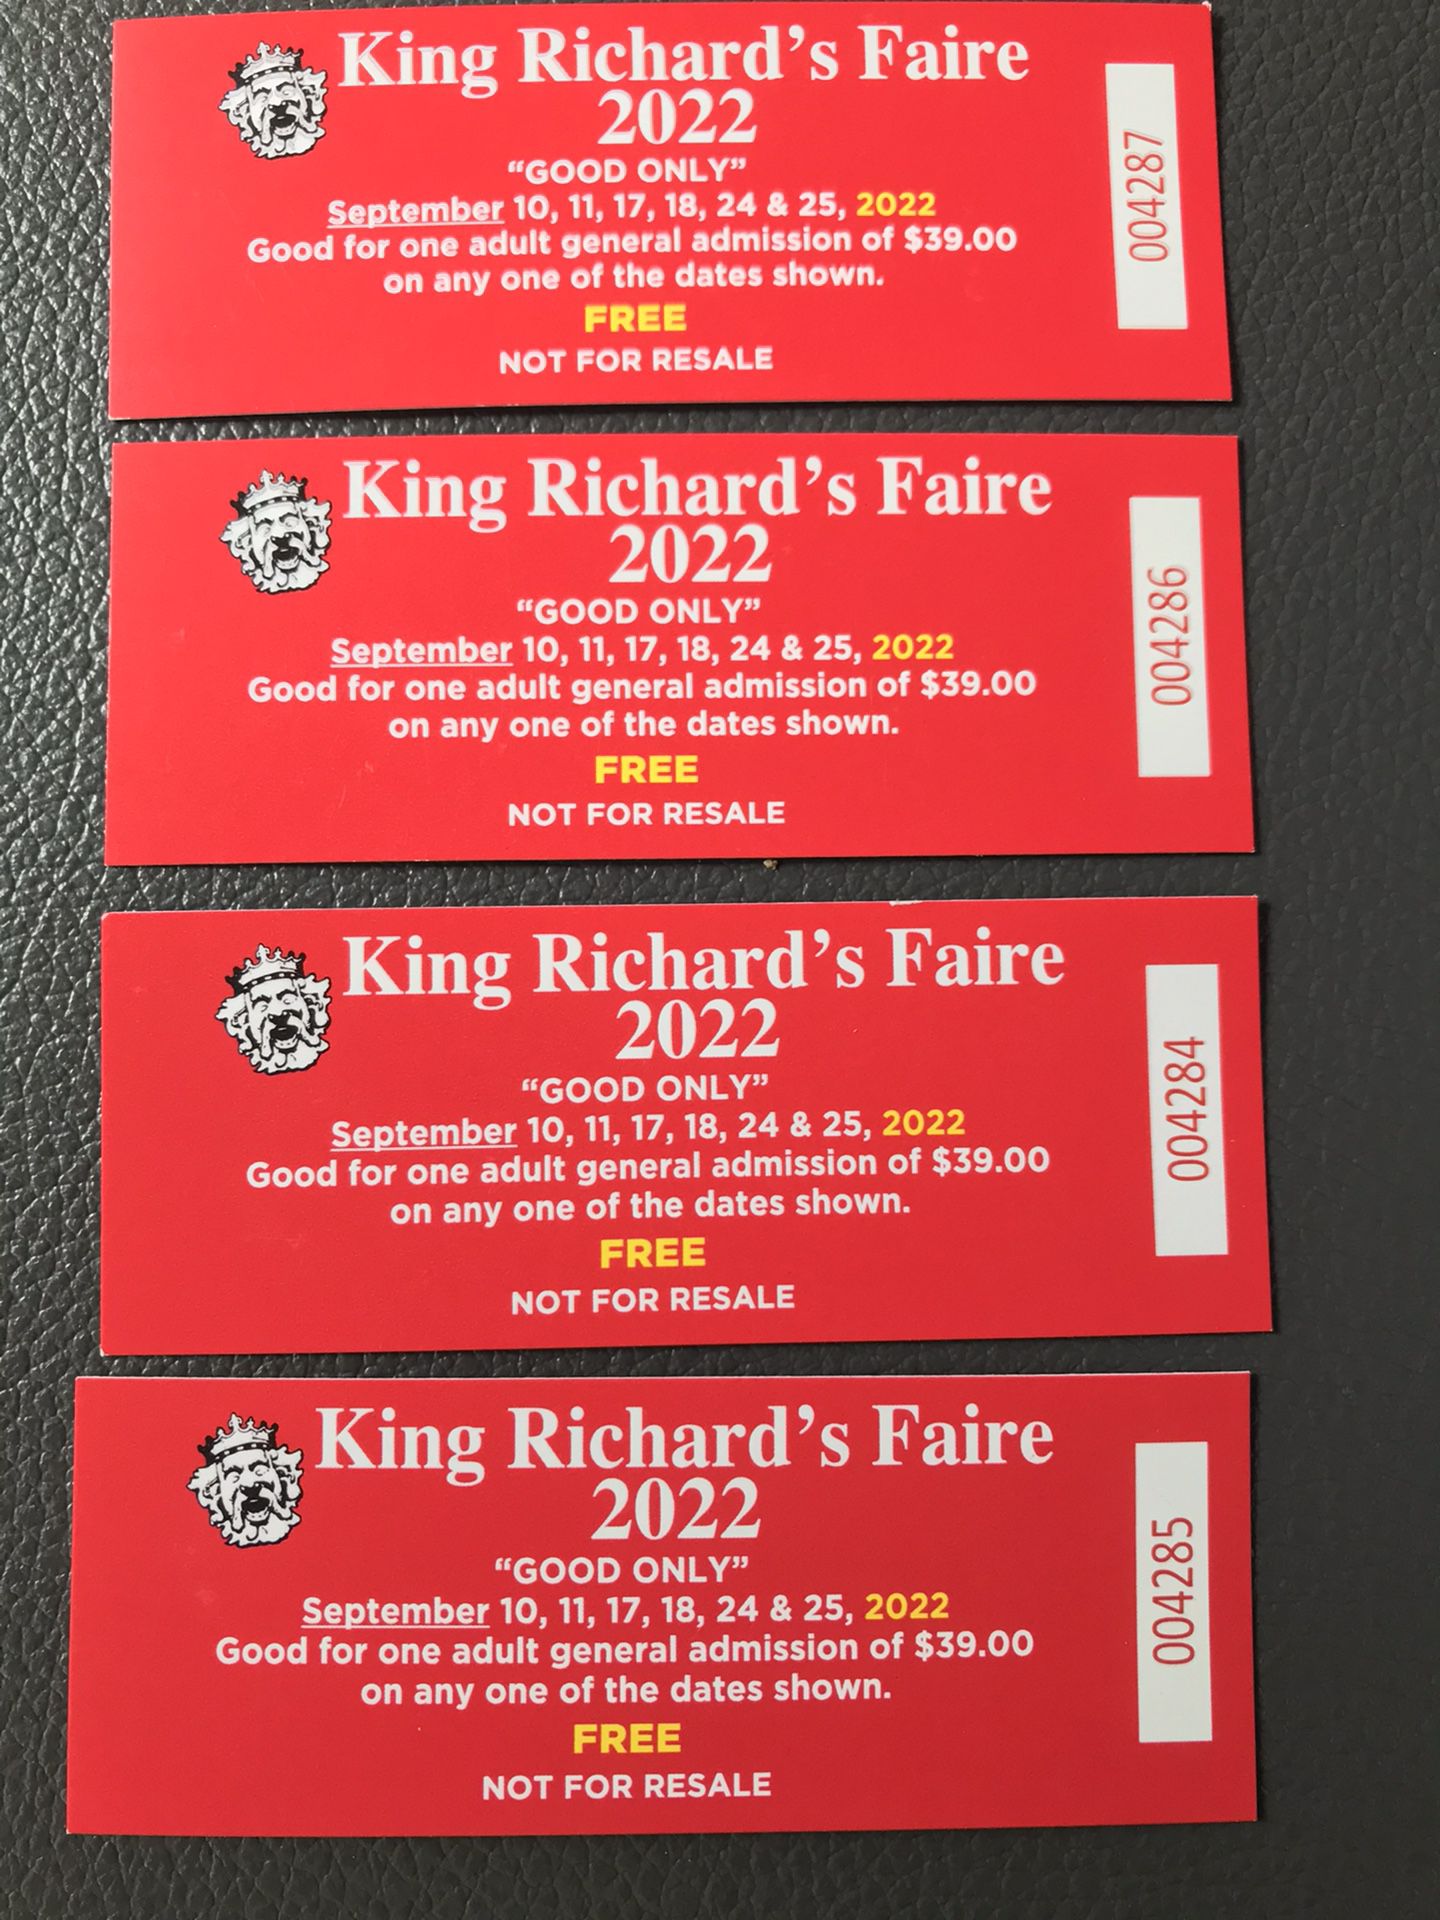 4 Tickets to King Richard’s fair